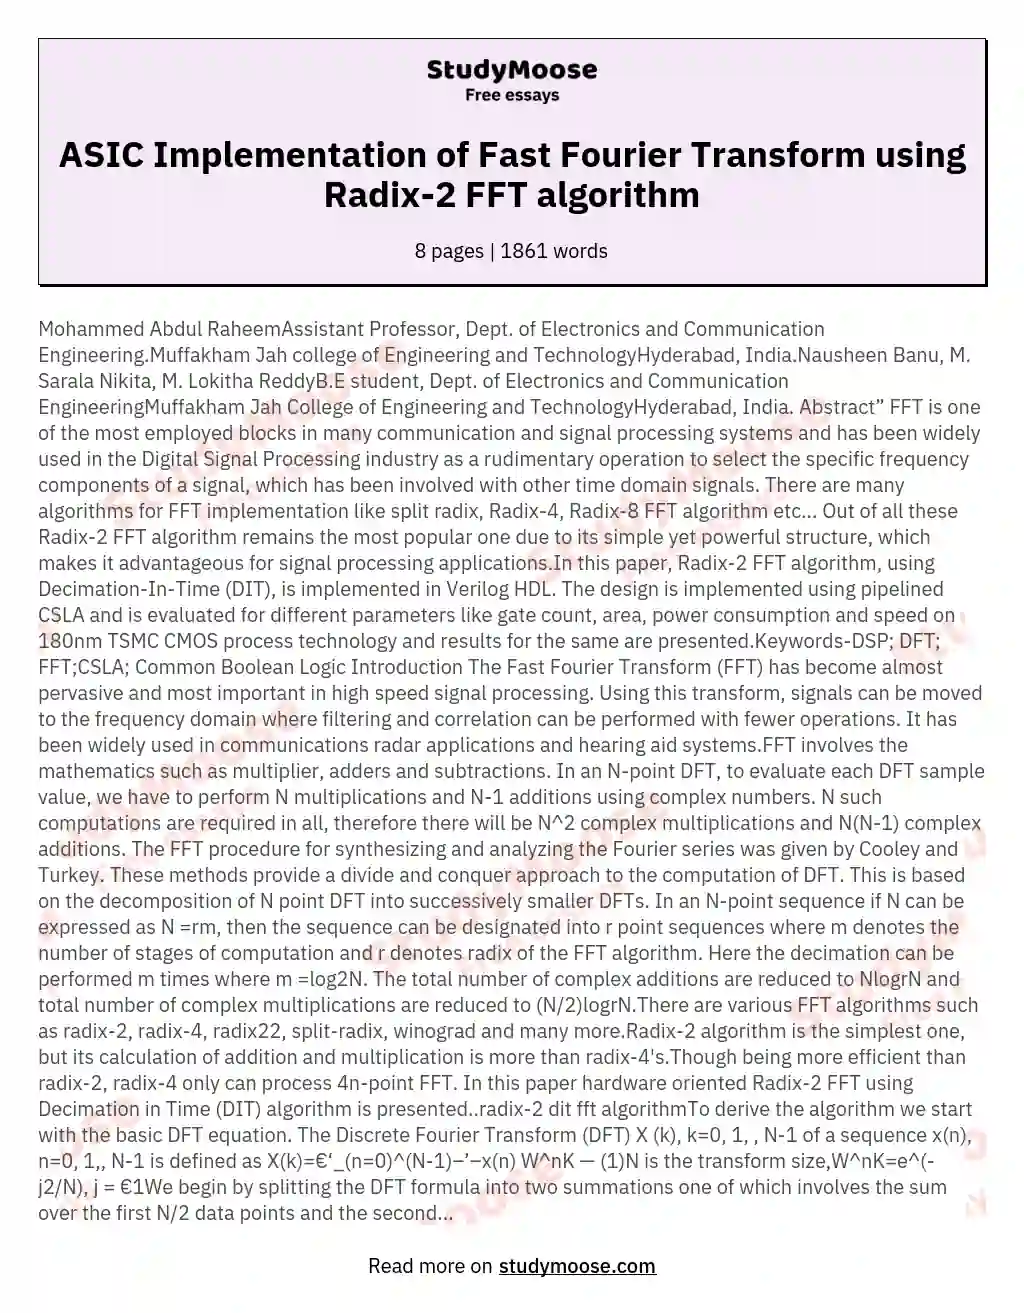 ASIC Implementation of Fast Fourier Transform using Radix-2 FFT algorithm essay